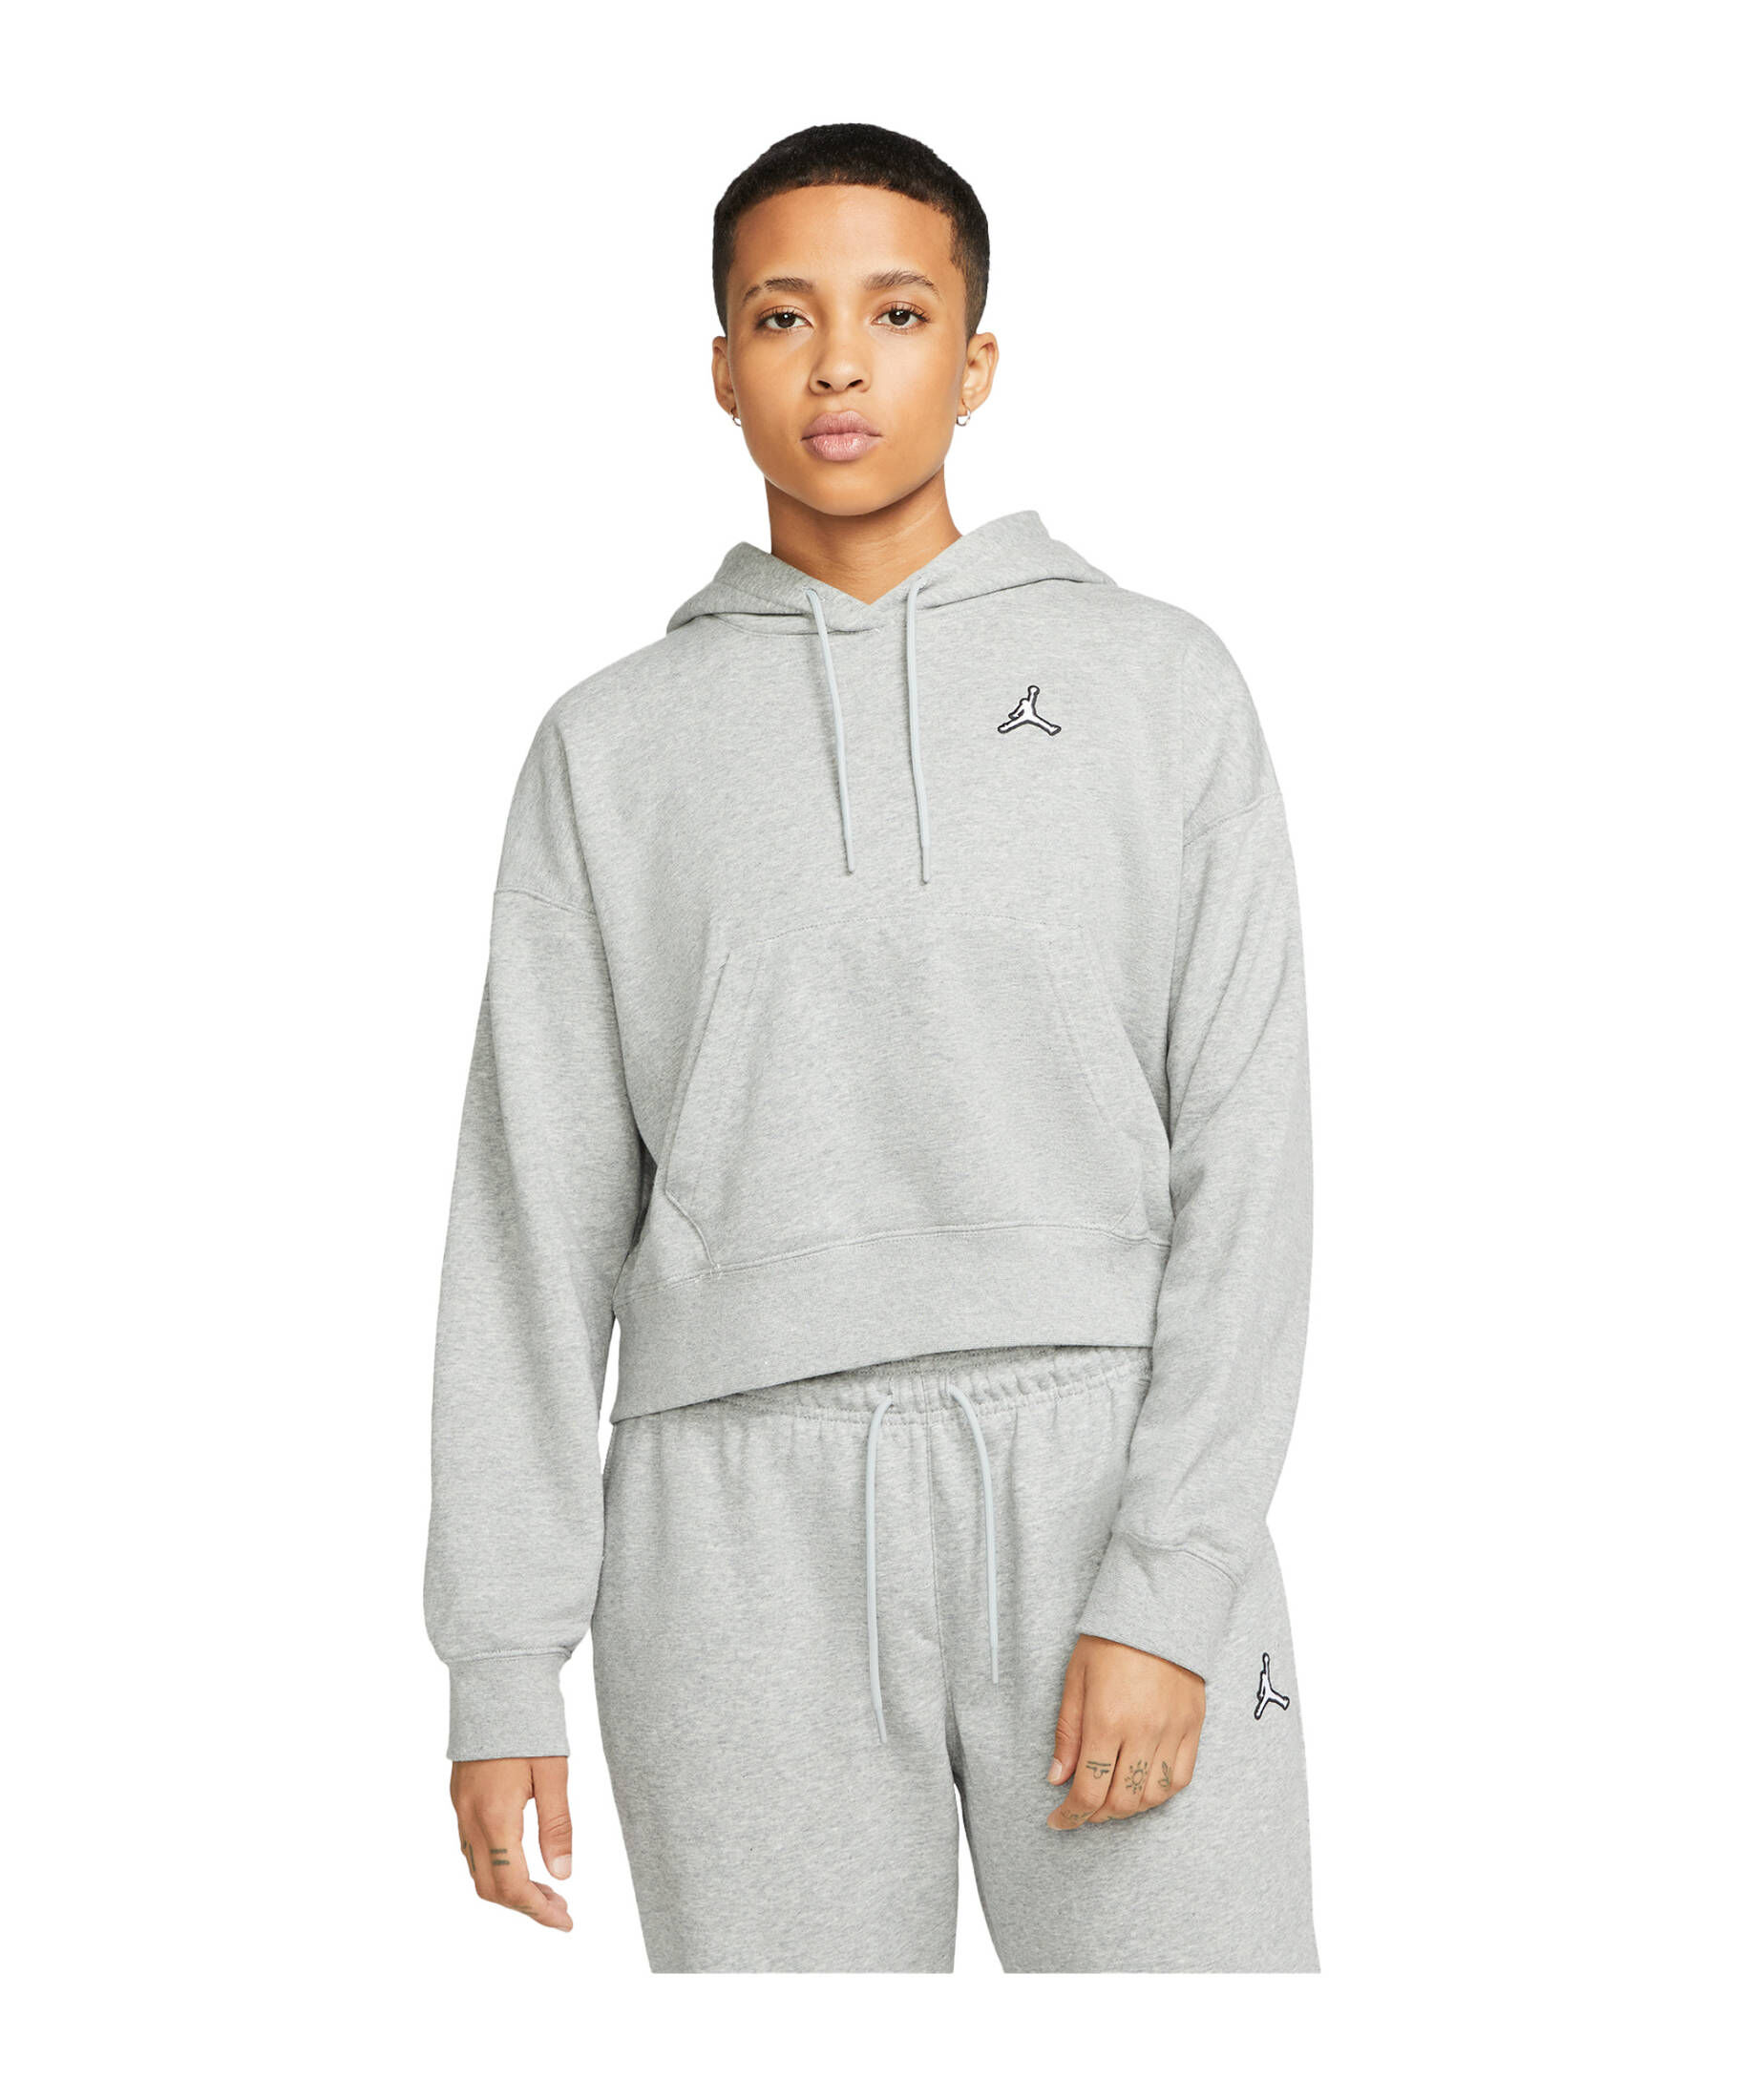 Air Jordan| Damen Lifestyle - Textilien - Sweatshirts Essential Core Hoody Damen